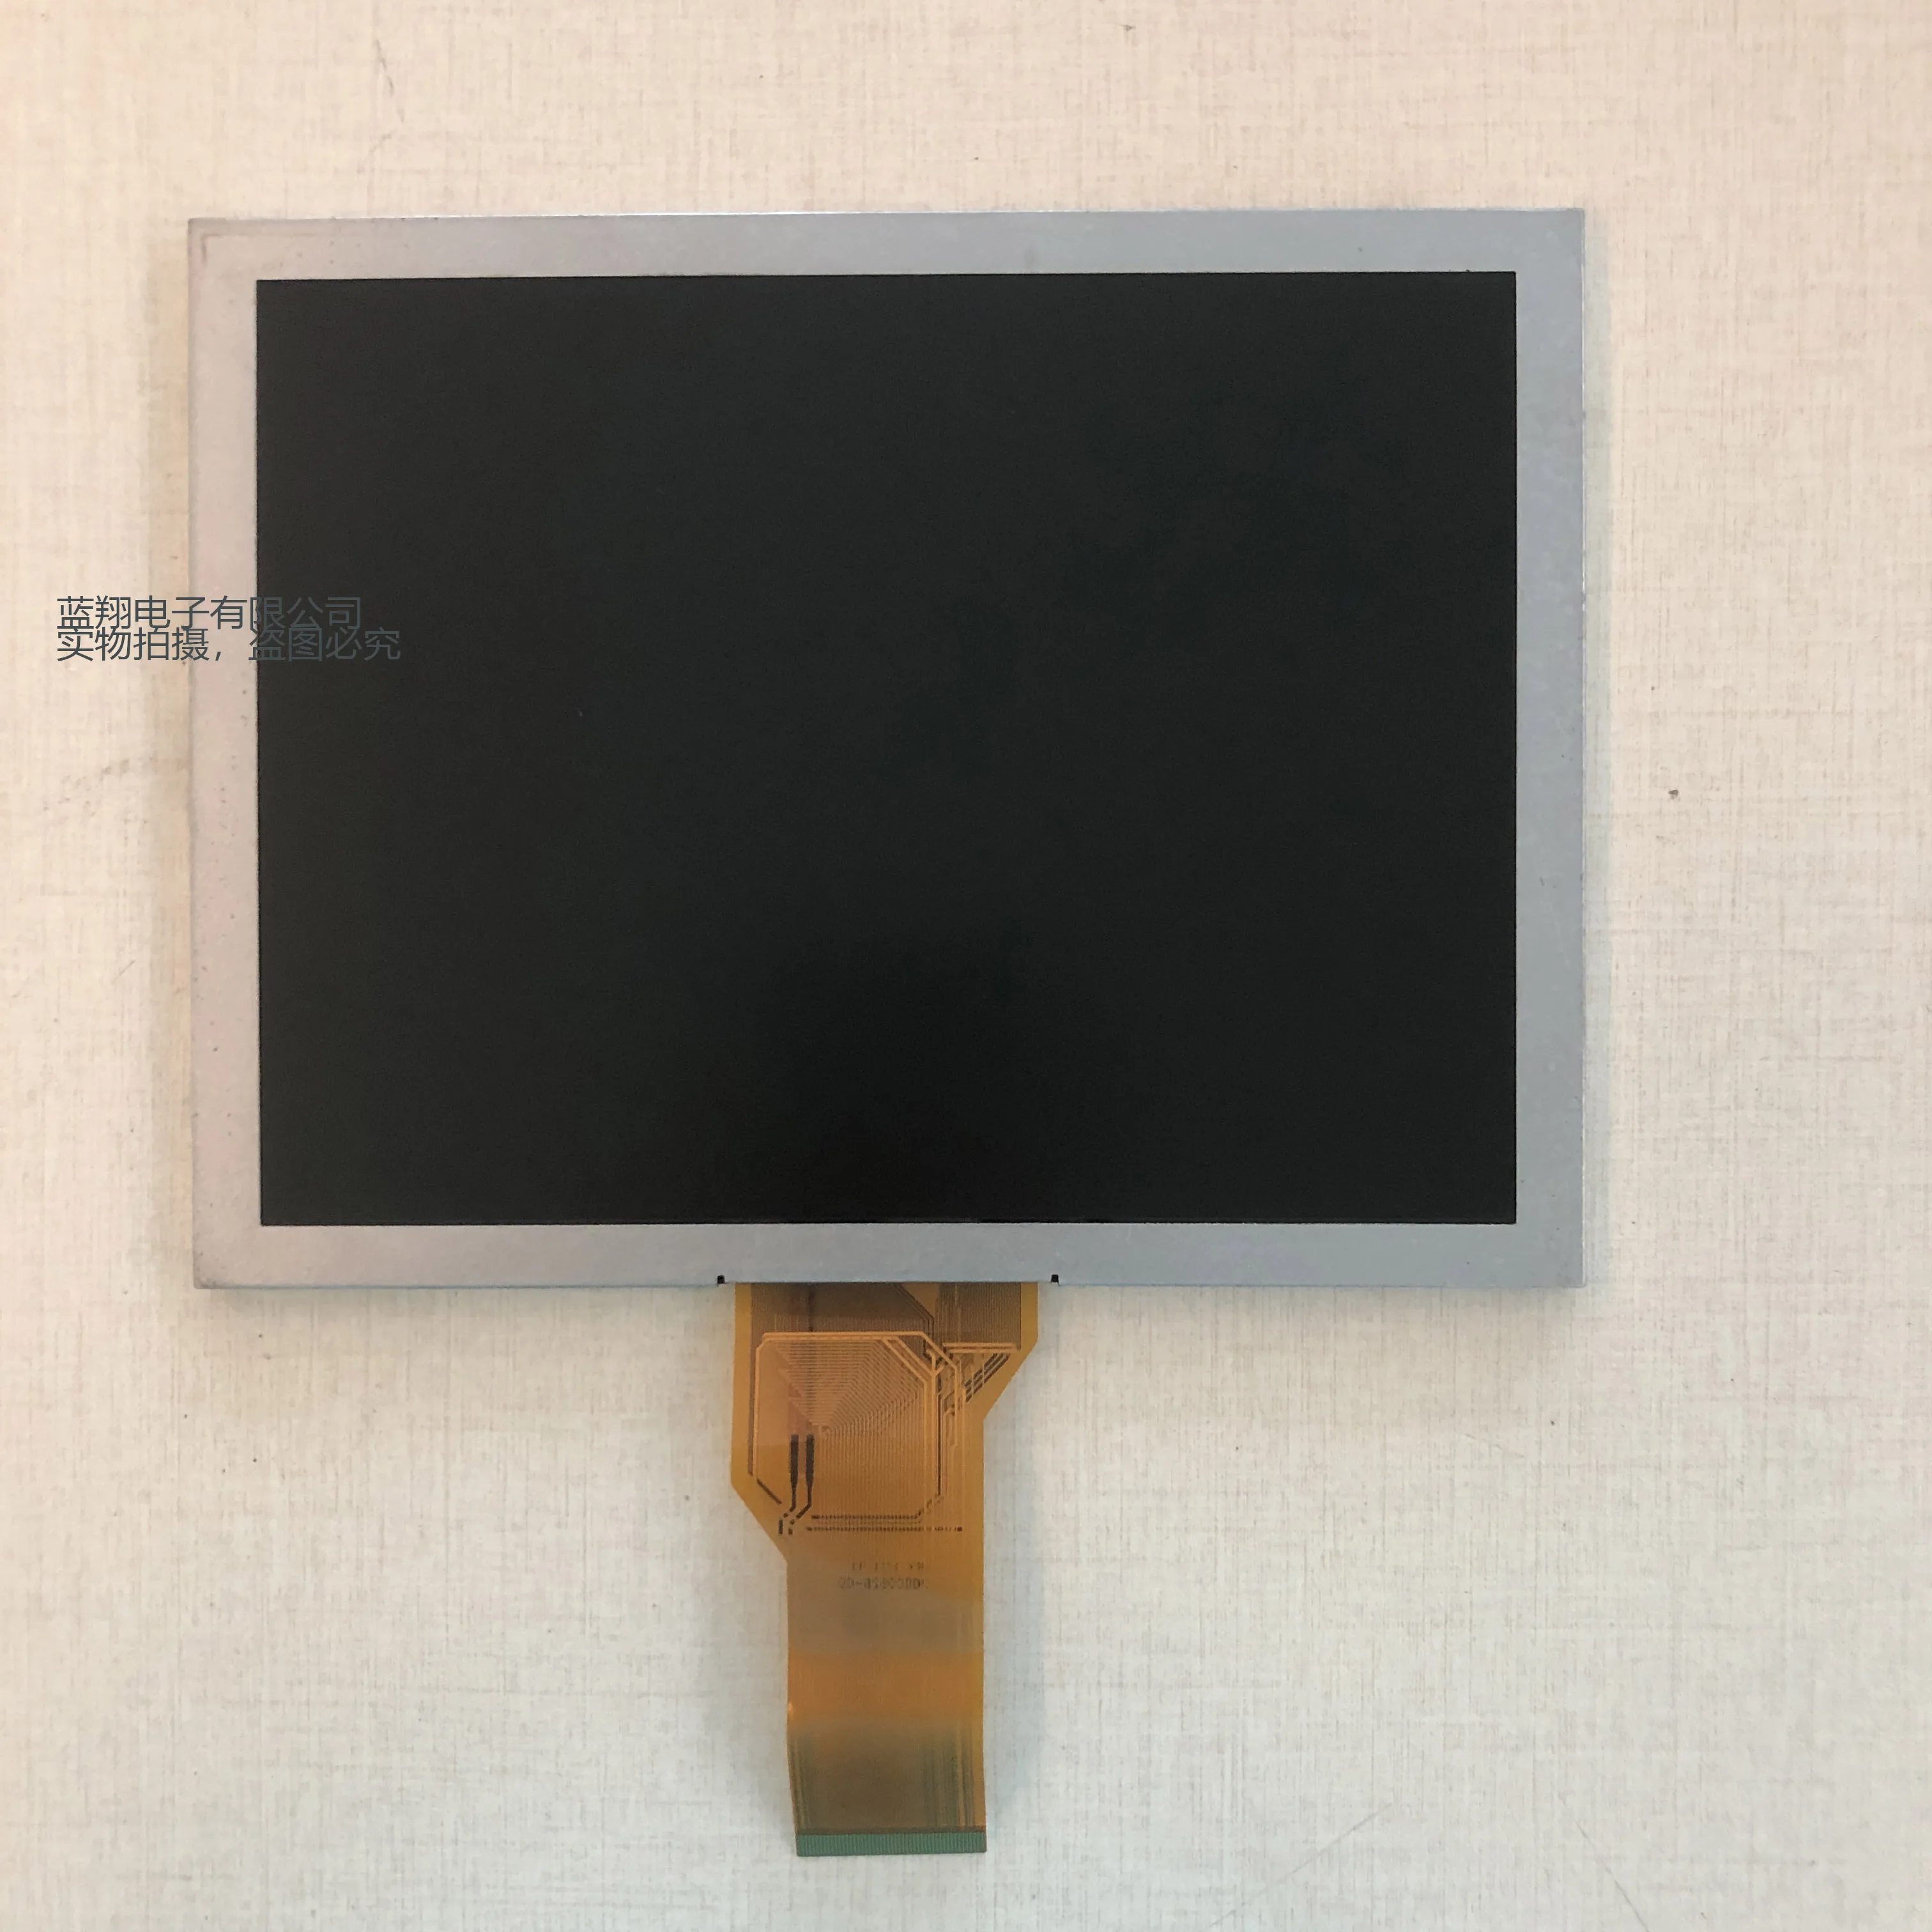 8 inch EJ080NA-05A EJ080NA-05B Display Panel 800x600 TFT LCD Screen Module AT080TN52 V.1 hdm i Controller Board Driver